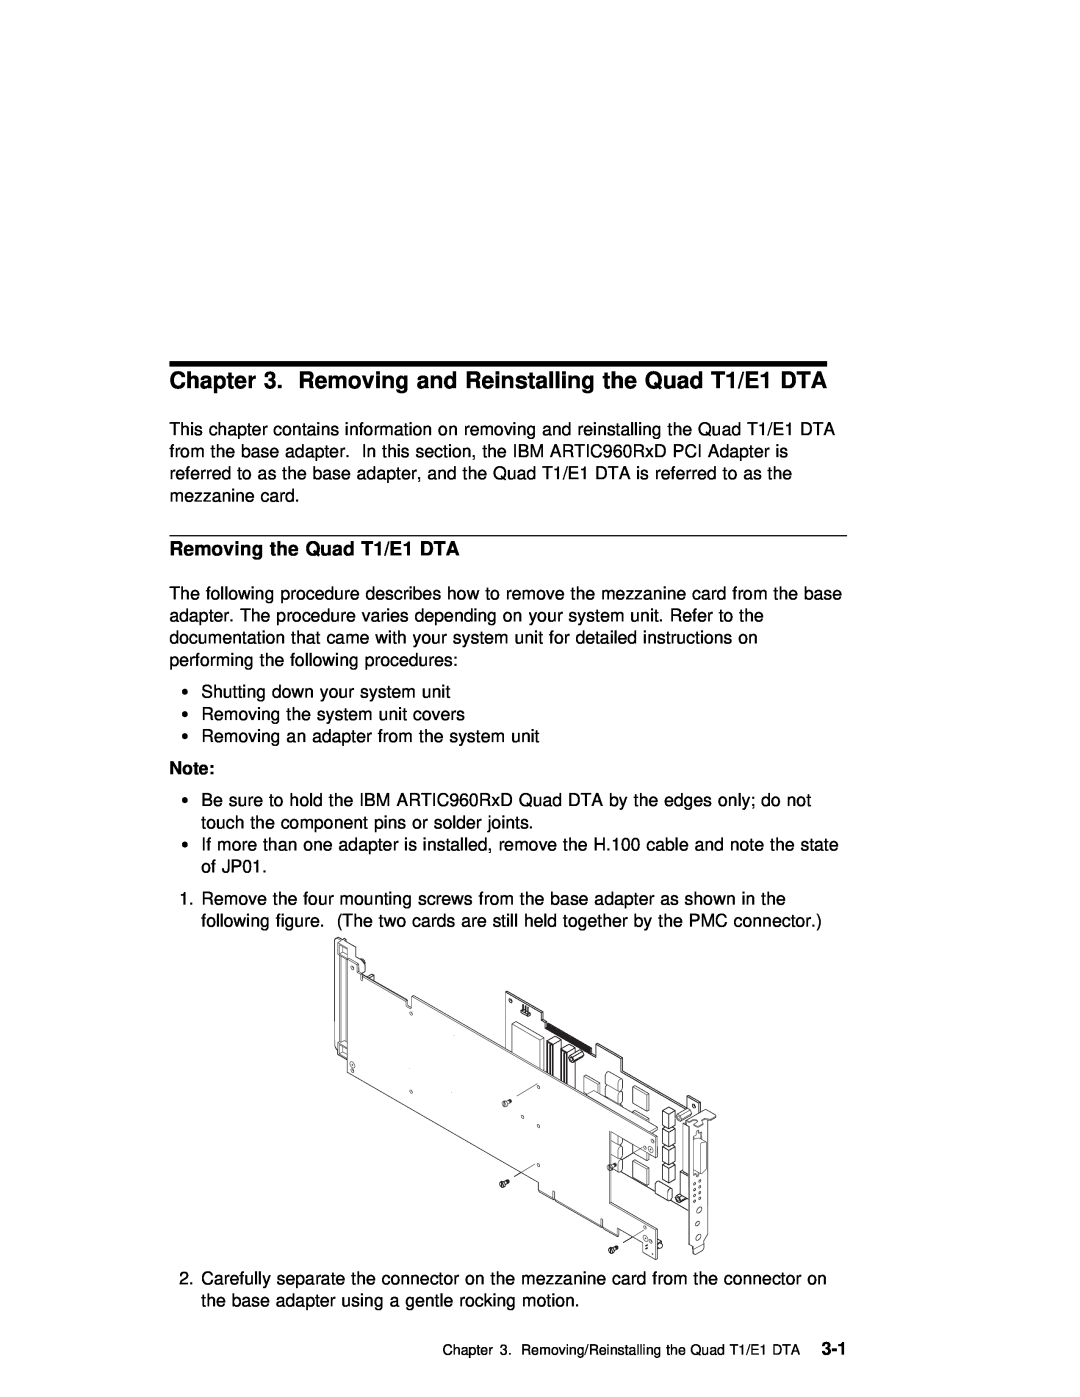 IBM ARTIC960RxD manual Reinstalling the Quad T1/E1 DTA, Removing 